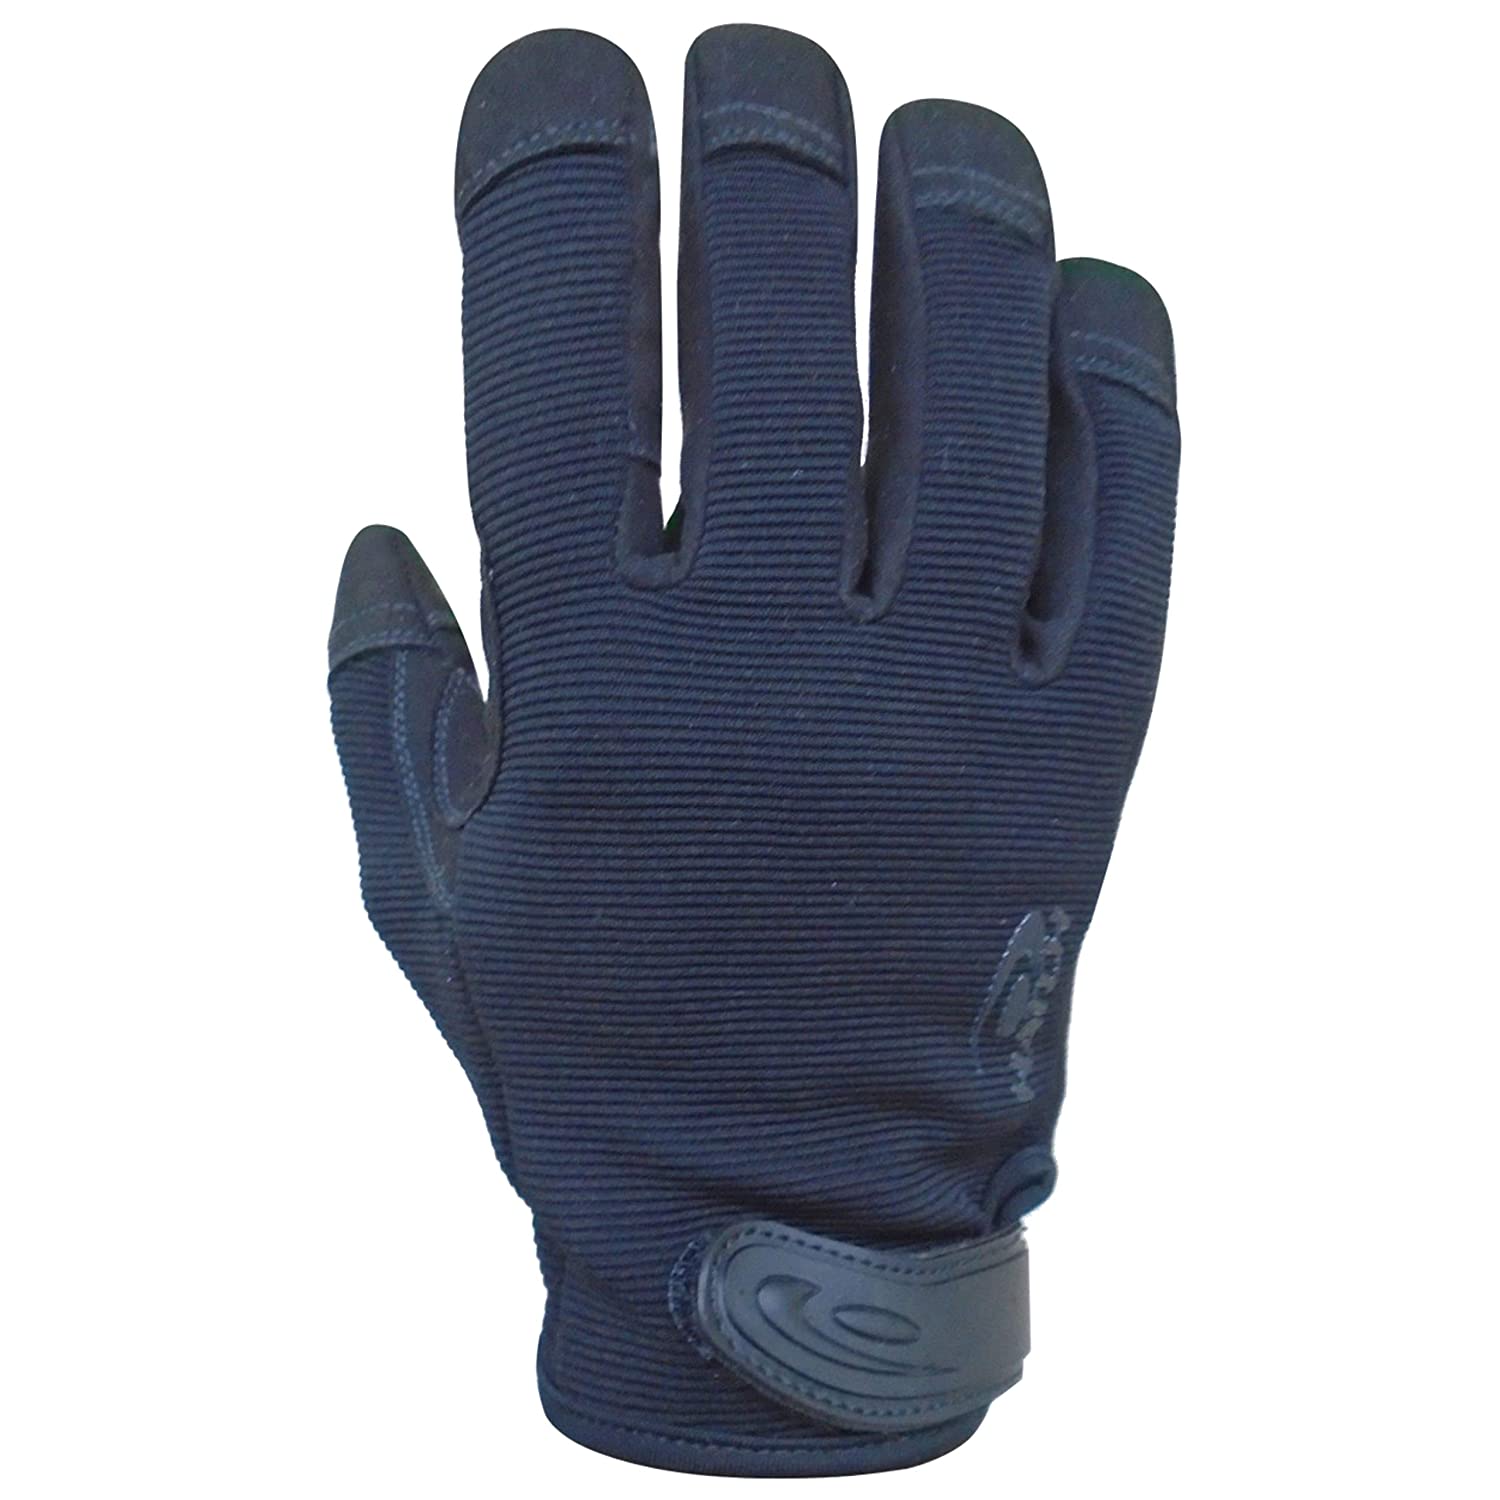 Hatch Friskmaster Max Cut-Resistant Glove